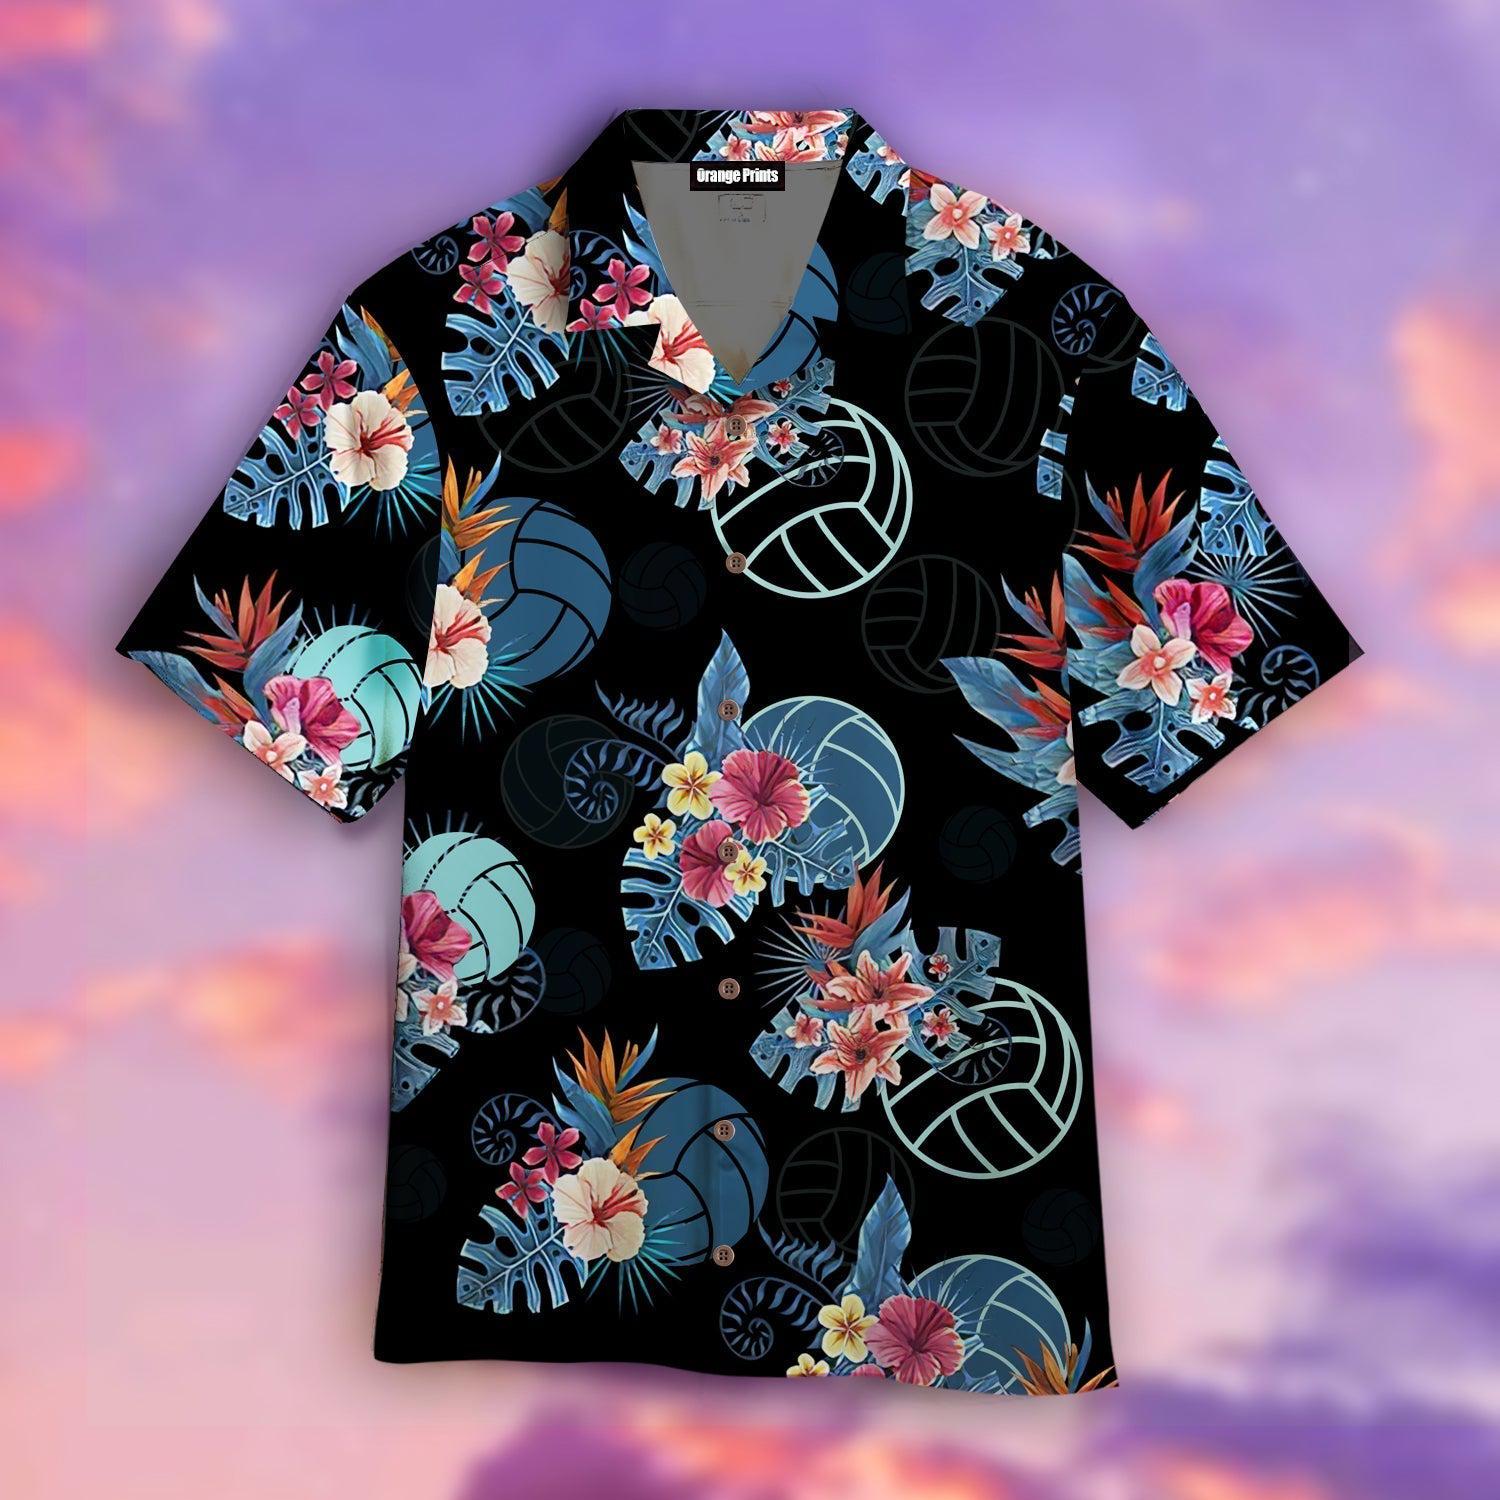 Bad-Bunny Dodgers Un Verano Sin Ti Trendy Hawaiian Shirt - Trendy